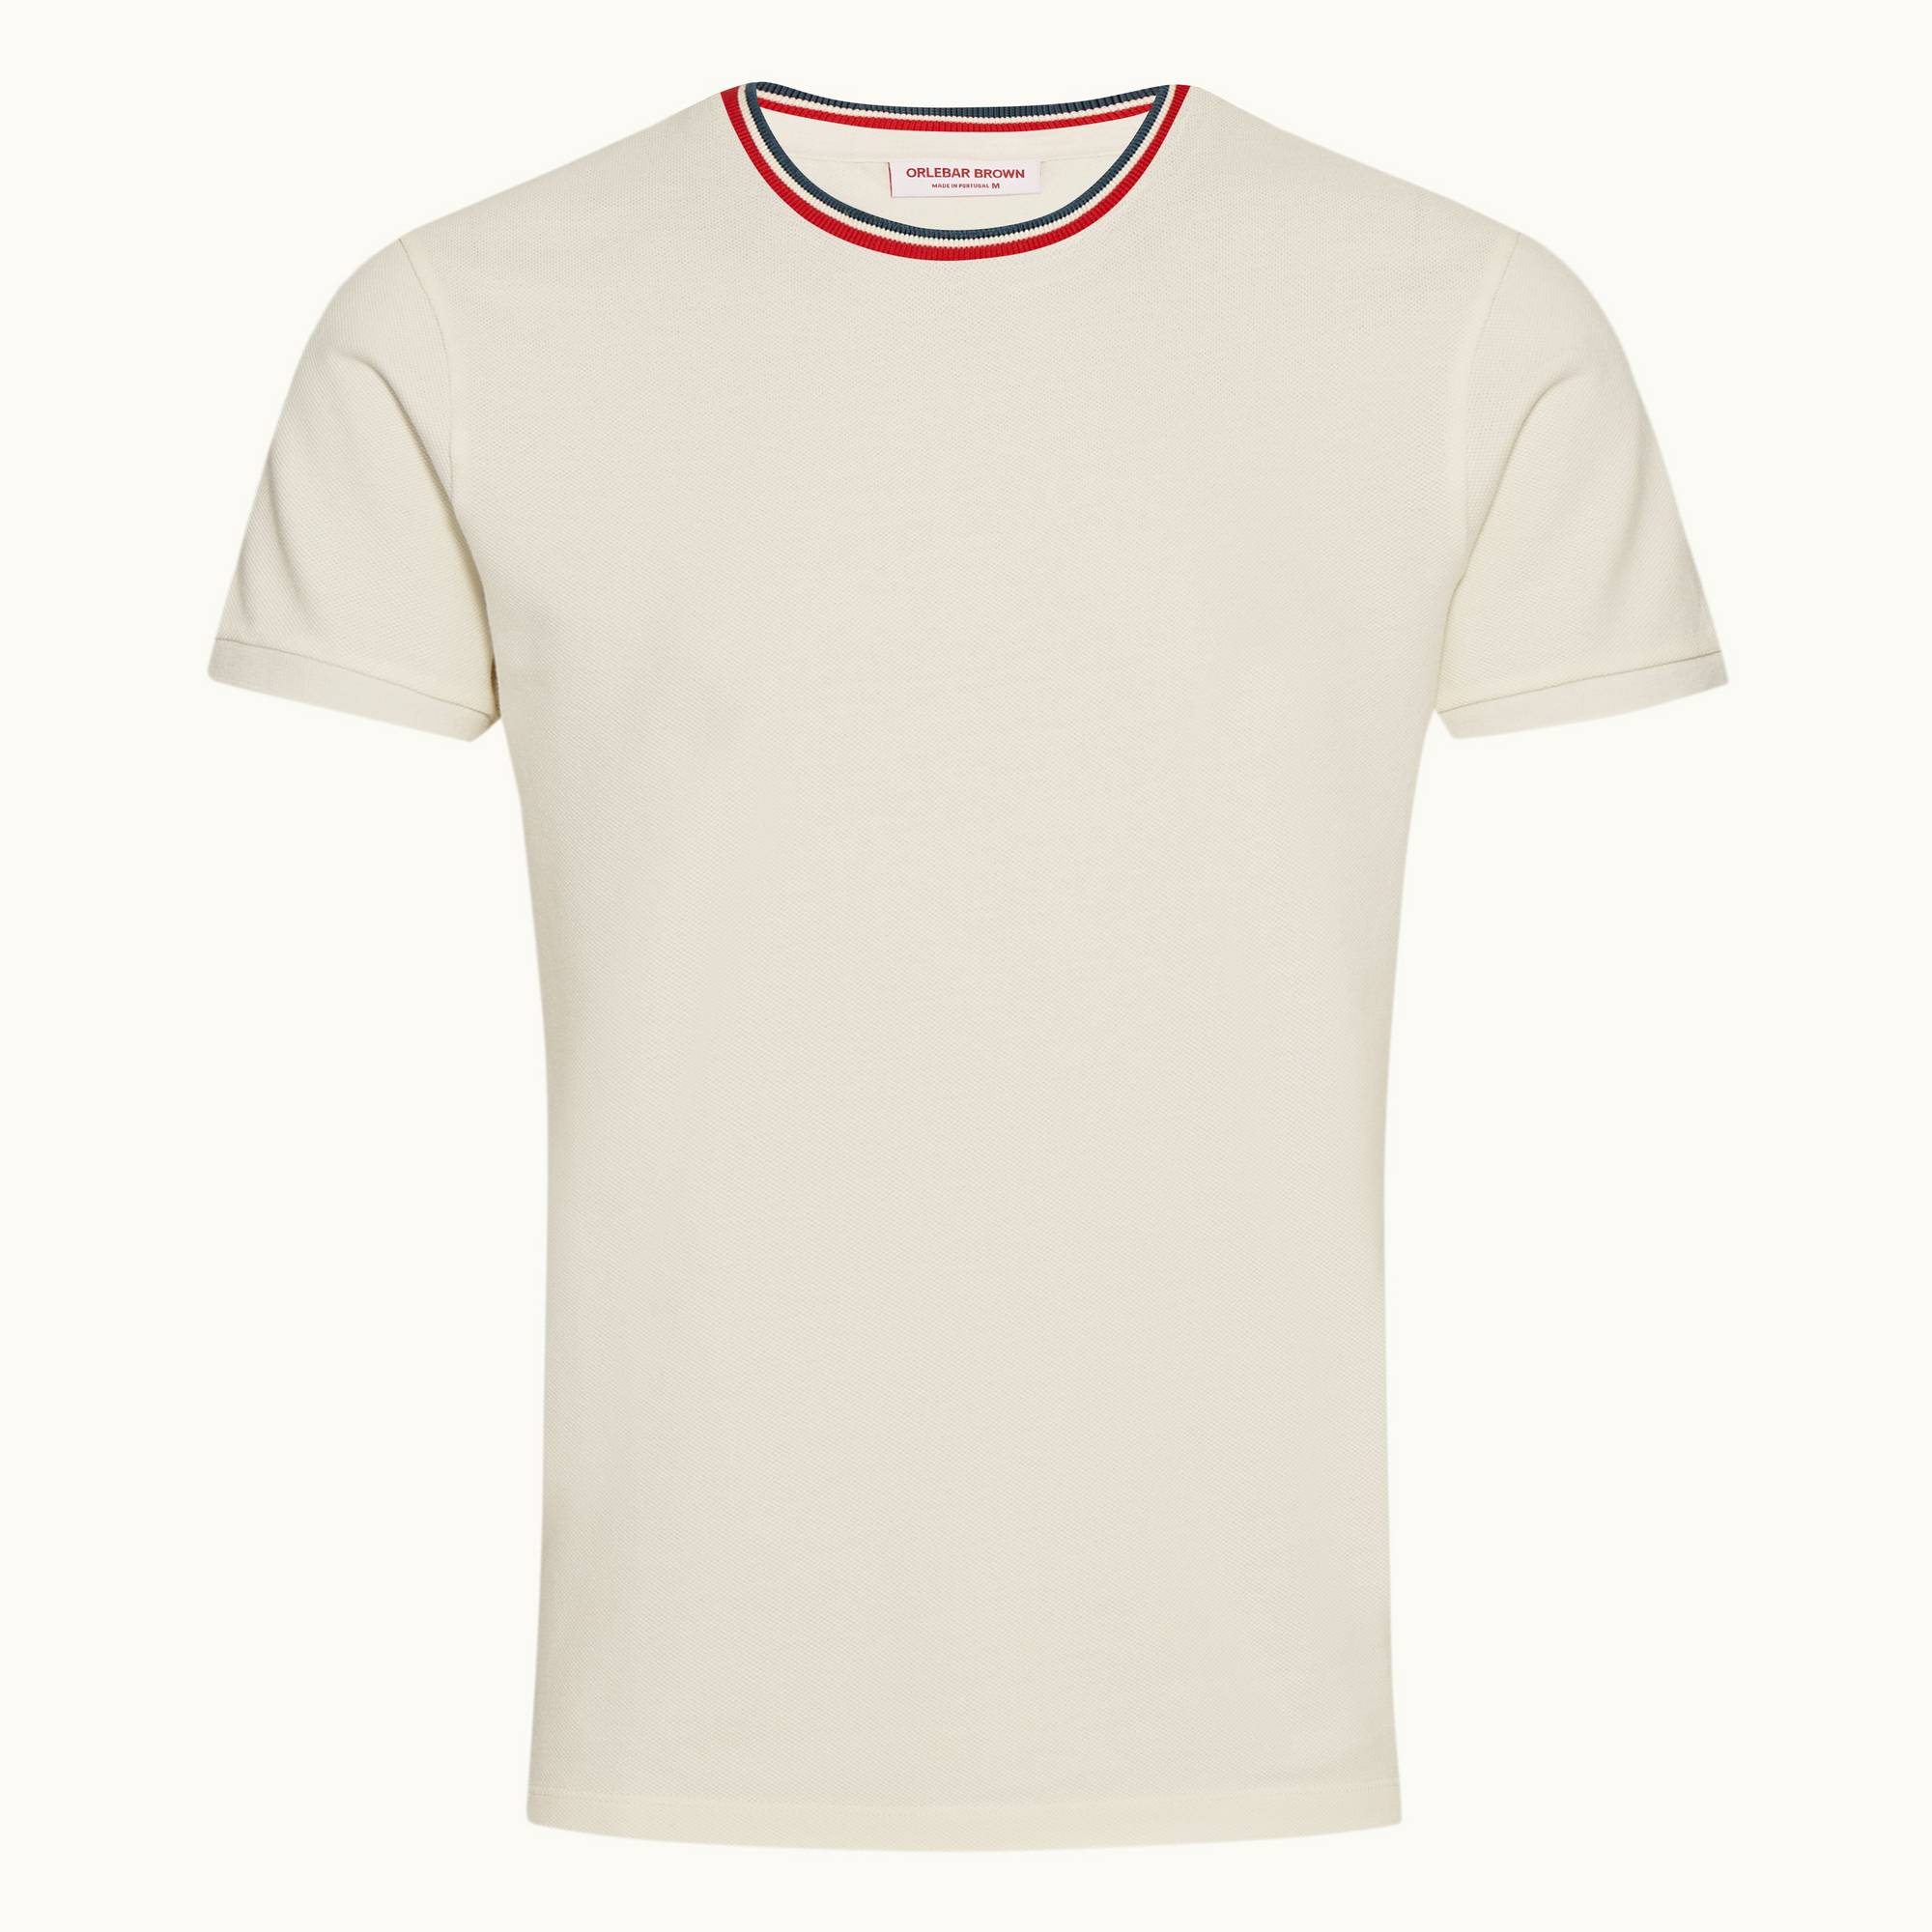 Sammy Stripe - Mens Cloud O.B Stripe Tipping Classic Fit T-shirt